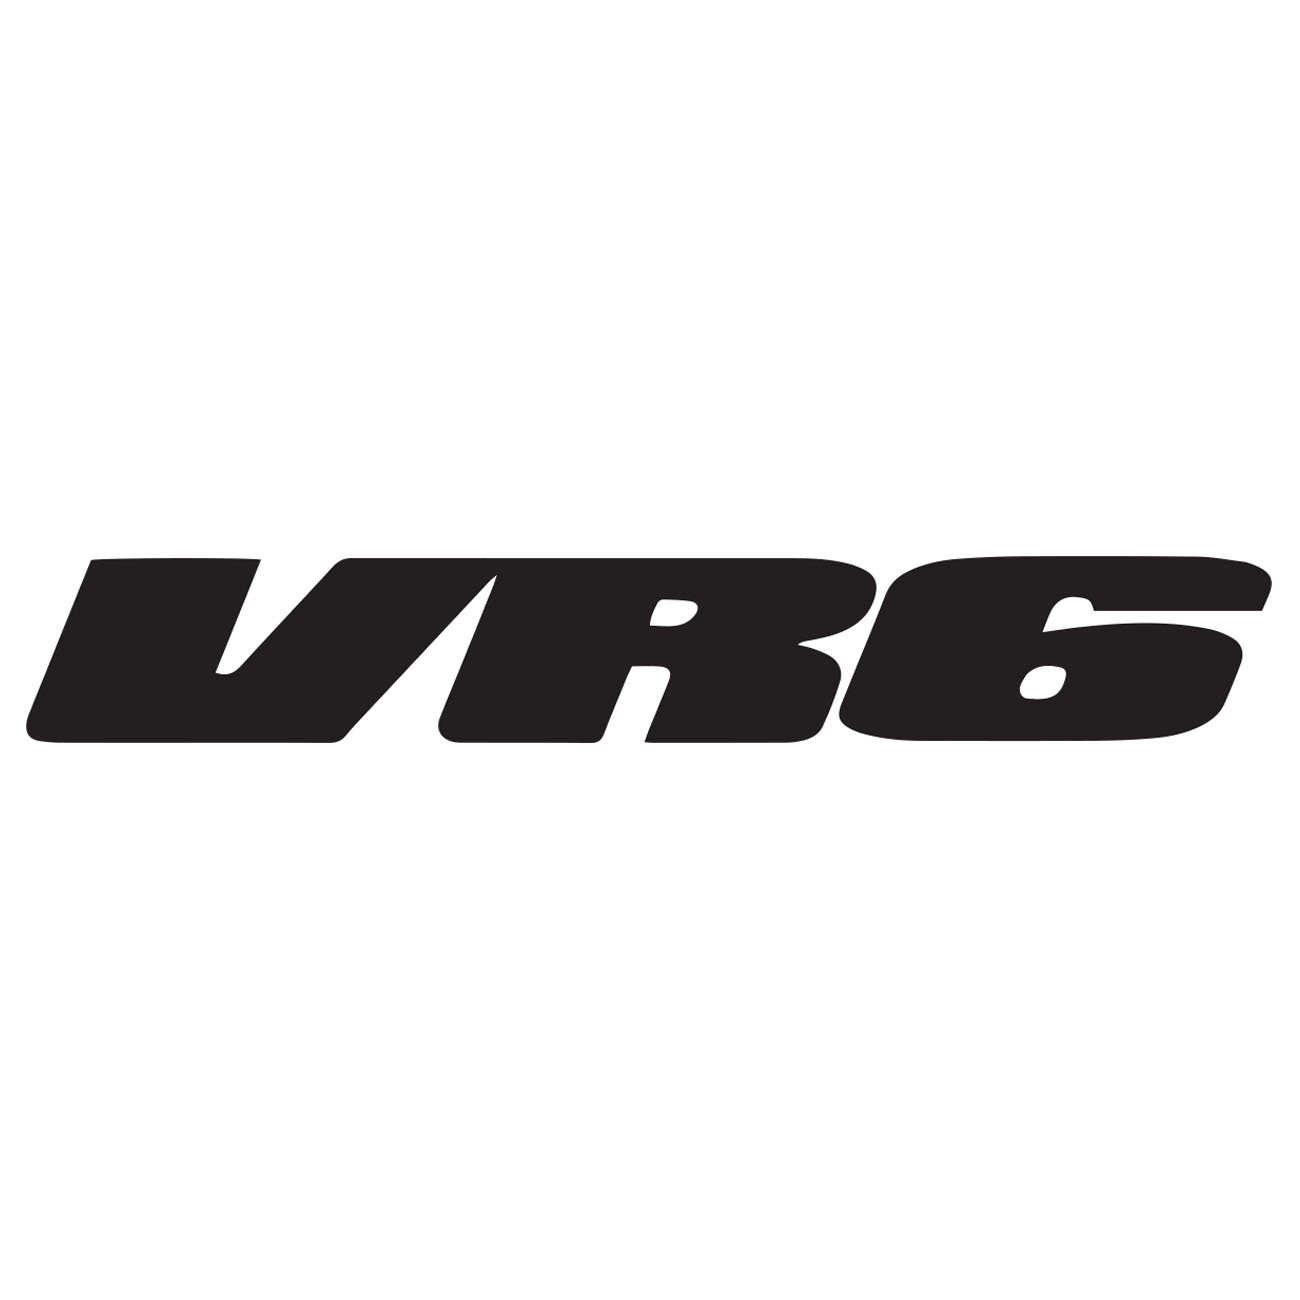 VW VR6 logo